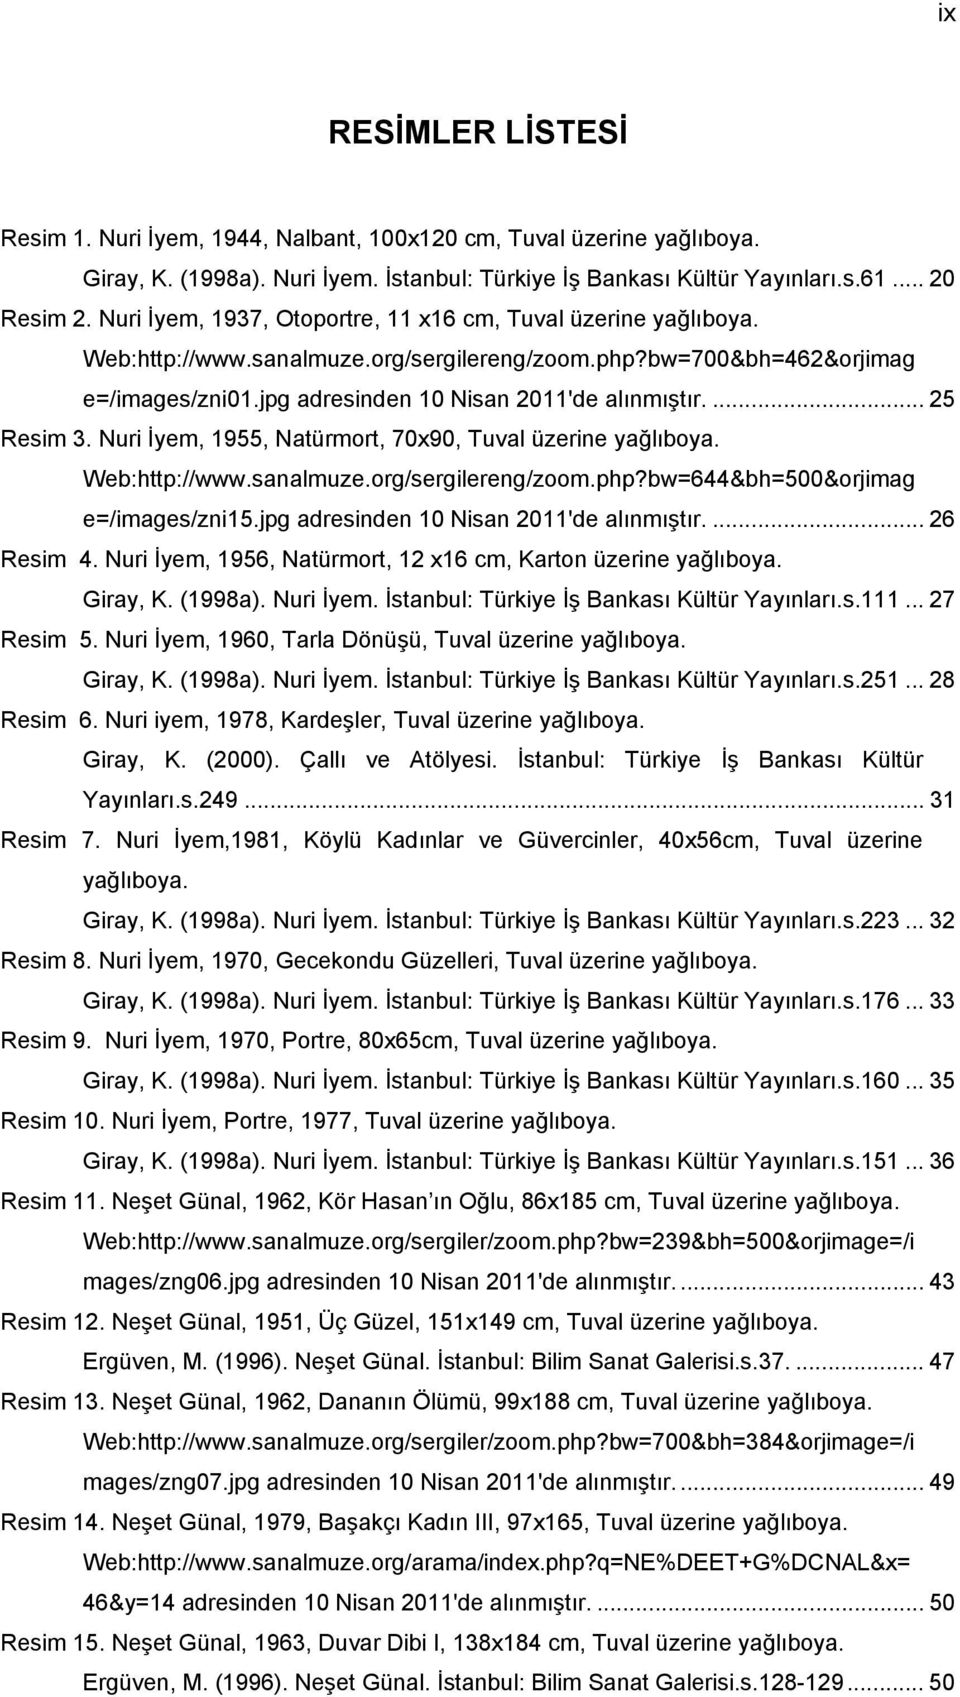 ... 25 Resim 3. Nuri İyem, 1955, Natürmort, 70x90, Tuval üzerine yağlıboya. Web:http://www.sanalmuze.org/sergilereng/zoom.php?bw=644&bh=500&orjimag e=/images/zni15.